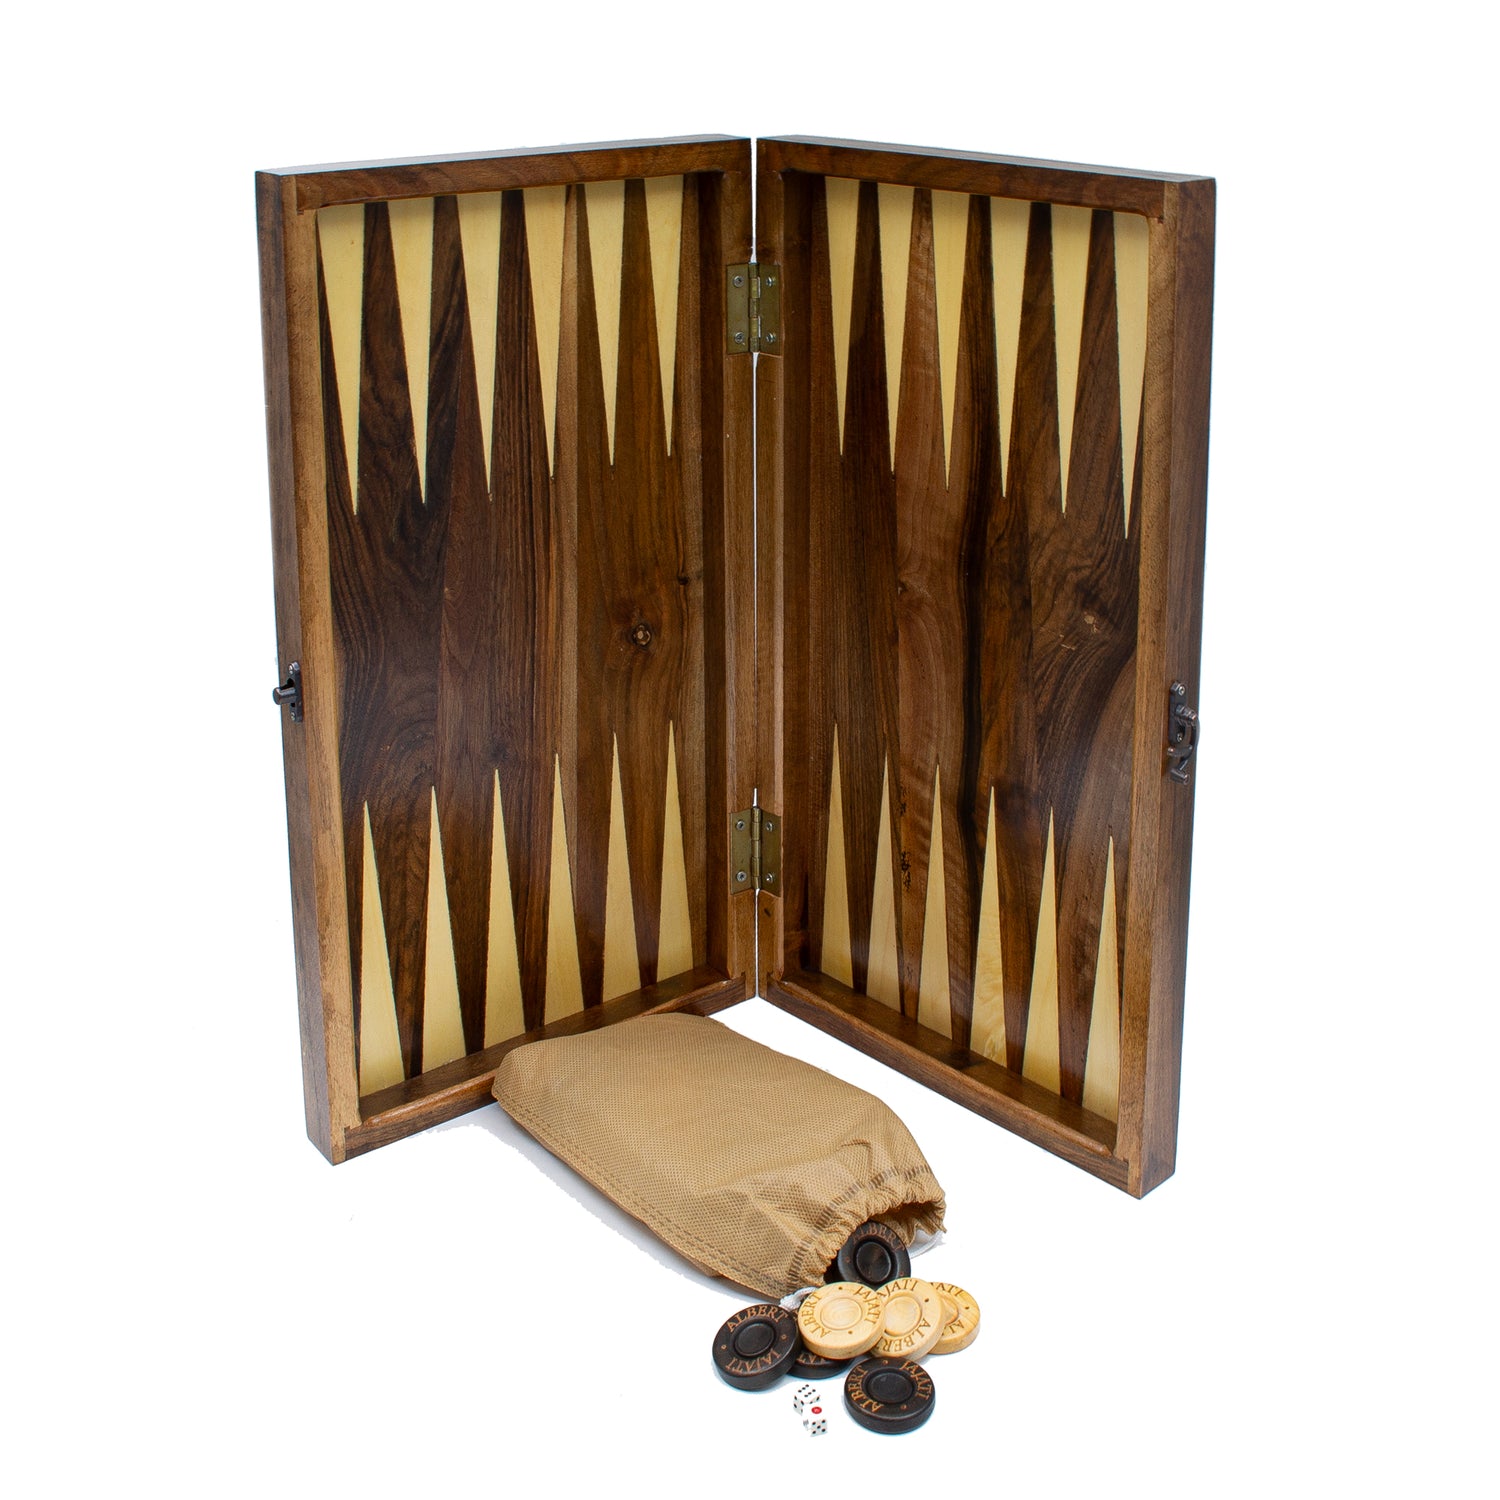 Handcrafted Walnut Backgammon: Rich Wood Grain - Ketohandcraft